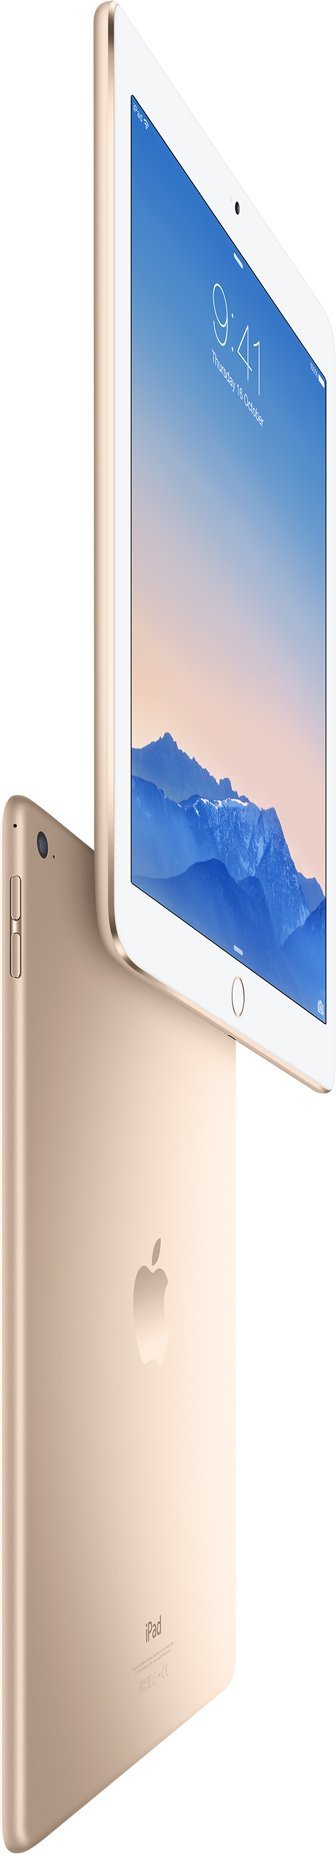 Apple iPad Air 2, 64GB, 4G + Wi-Fi - Gold (Renewed)